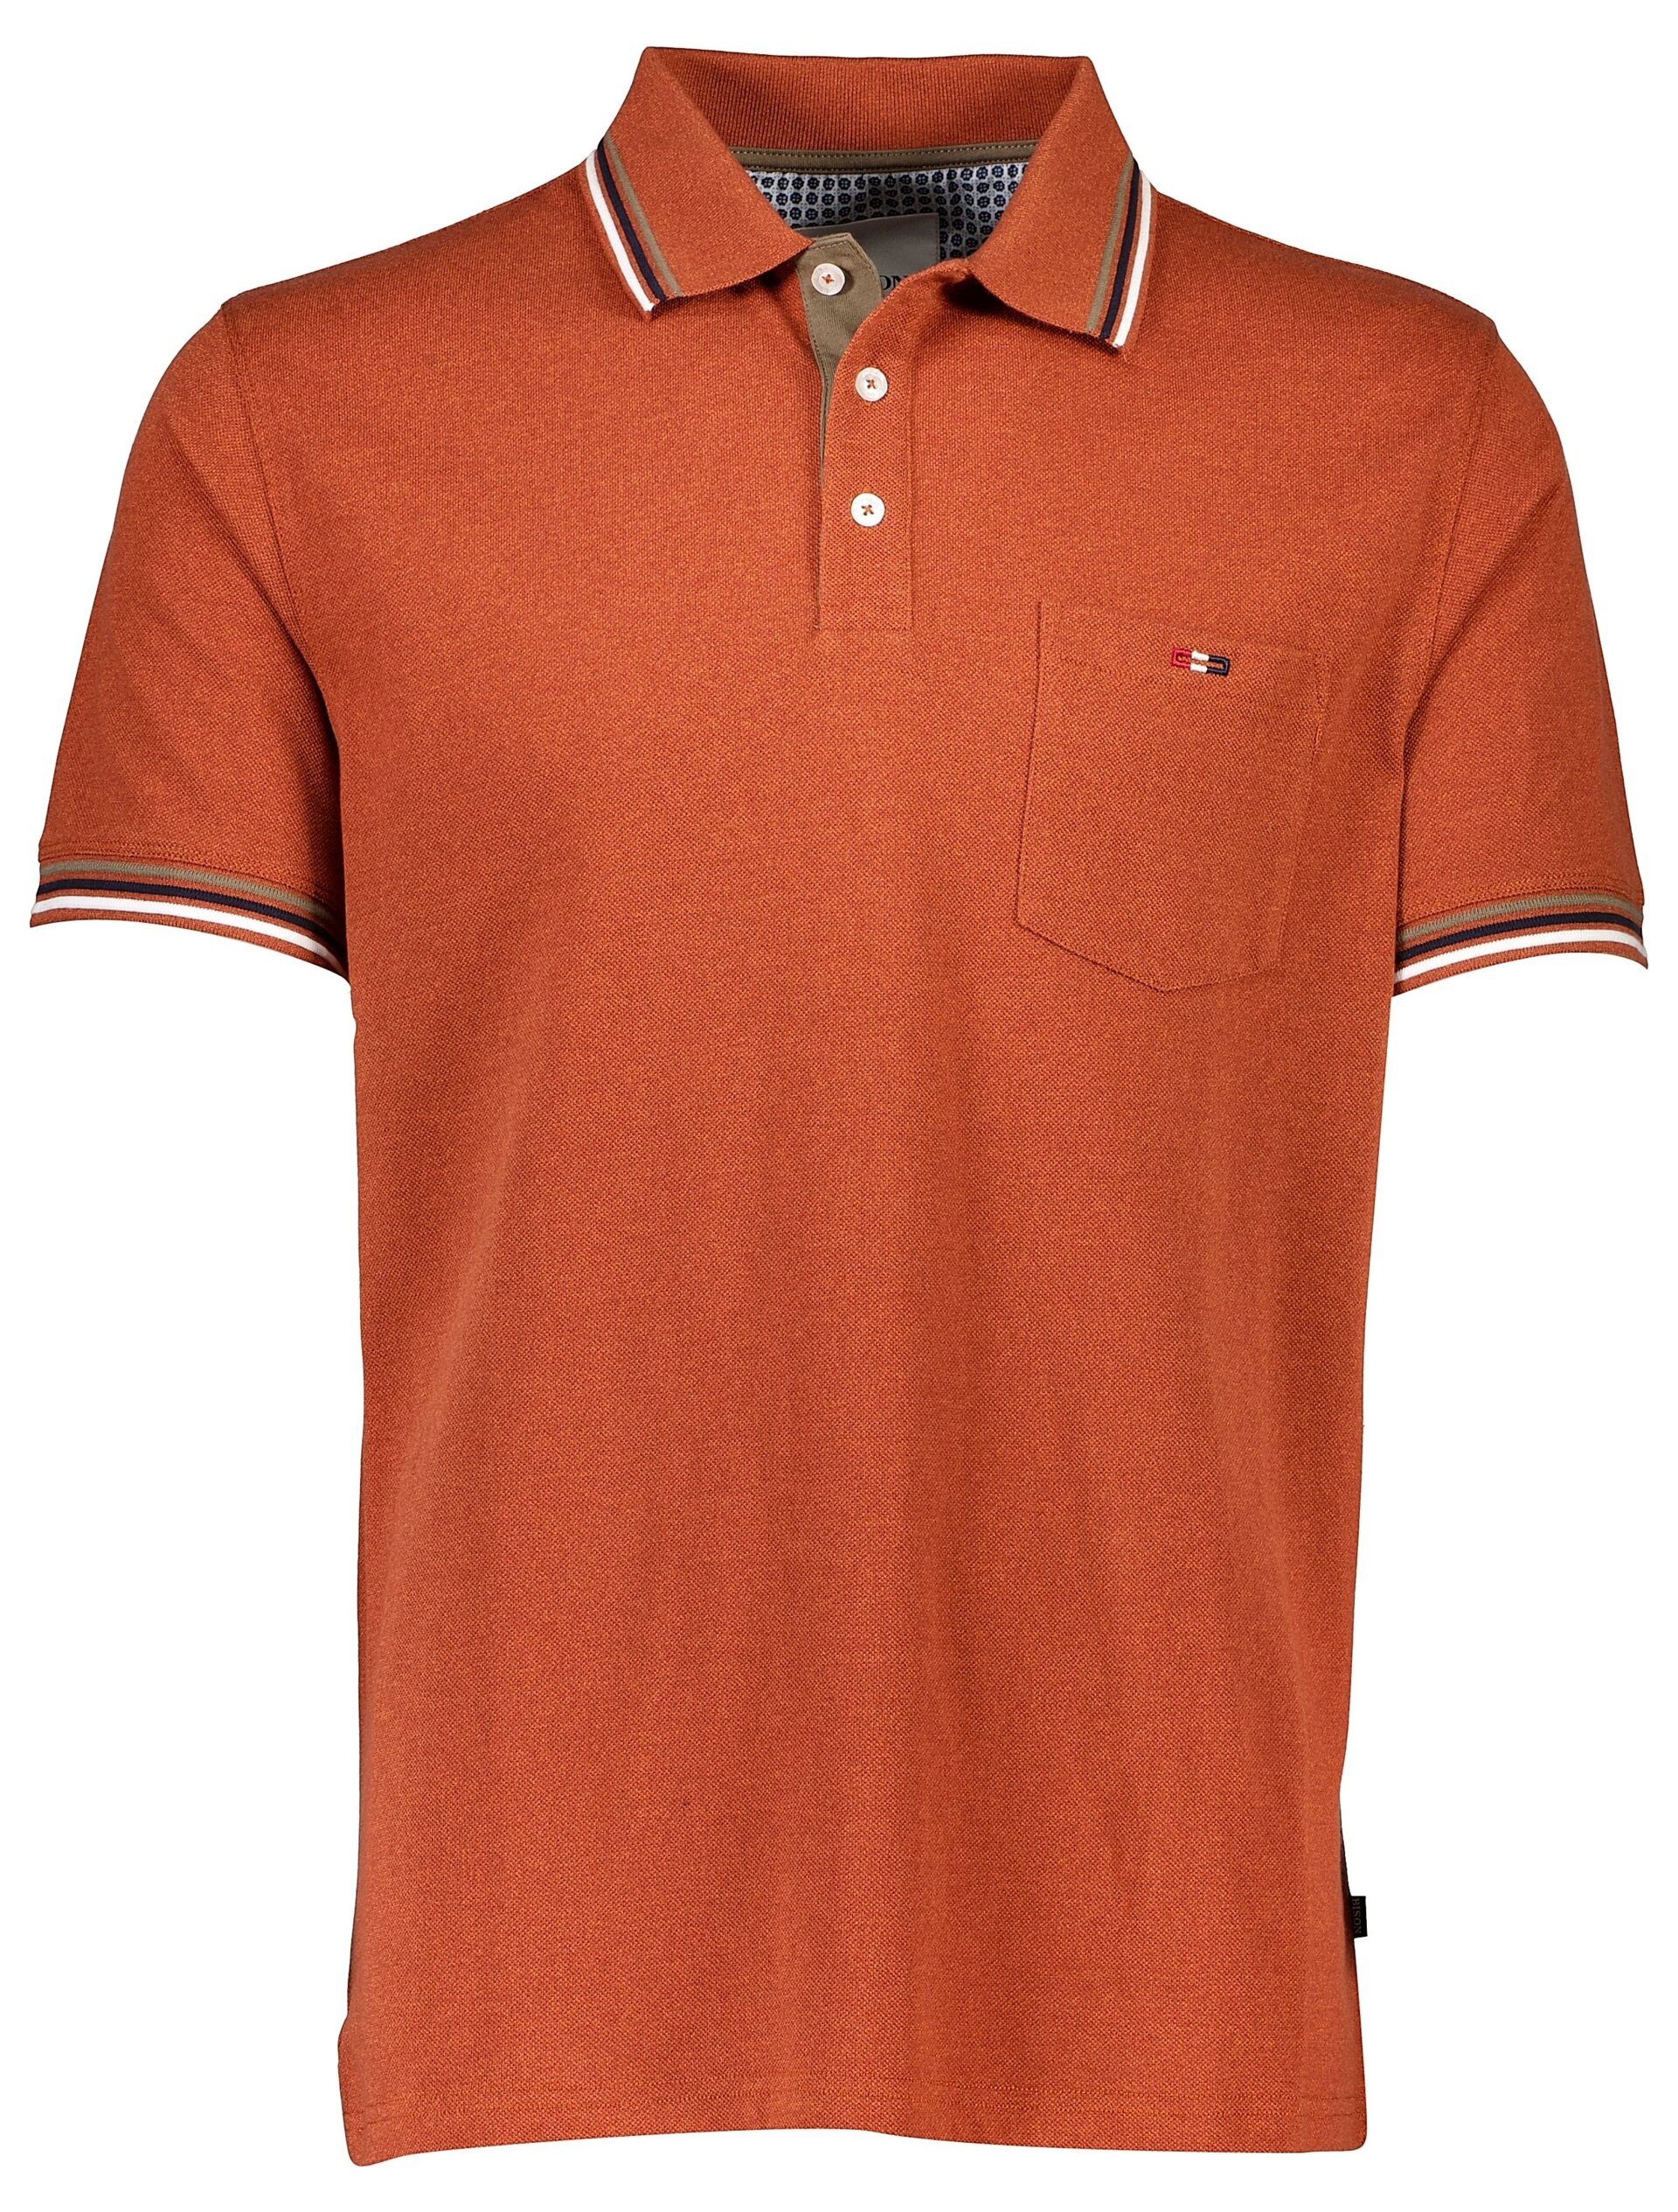 Bison Poloshirt orange / dk orange 224